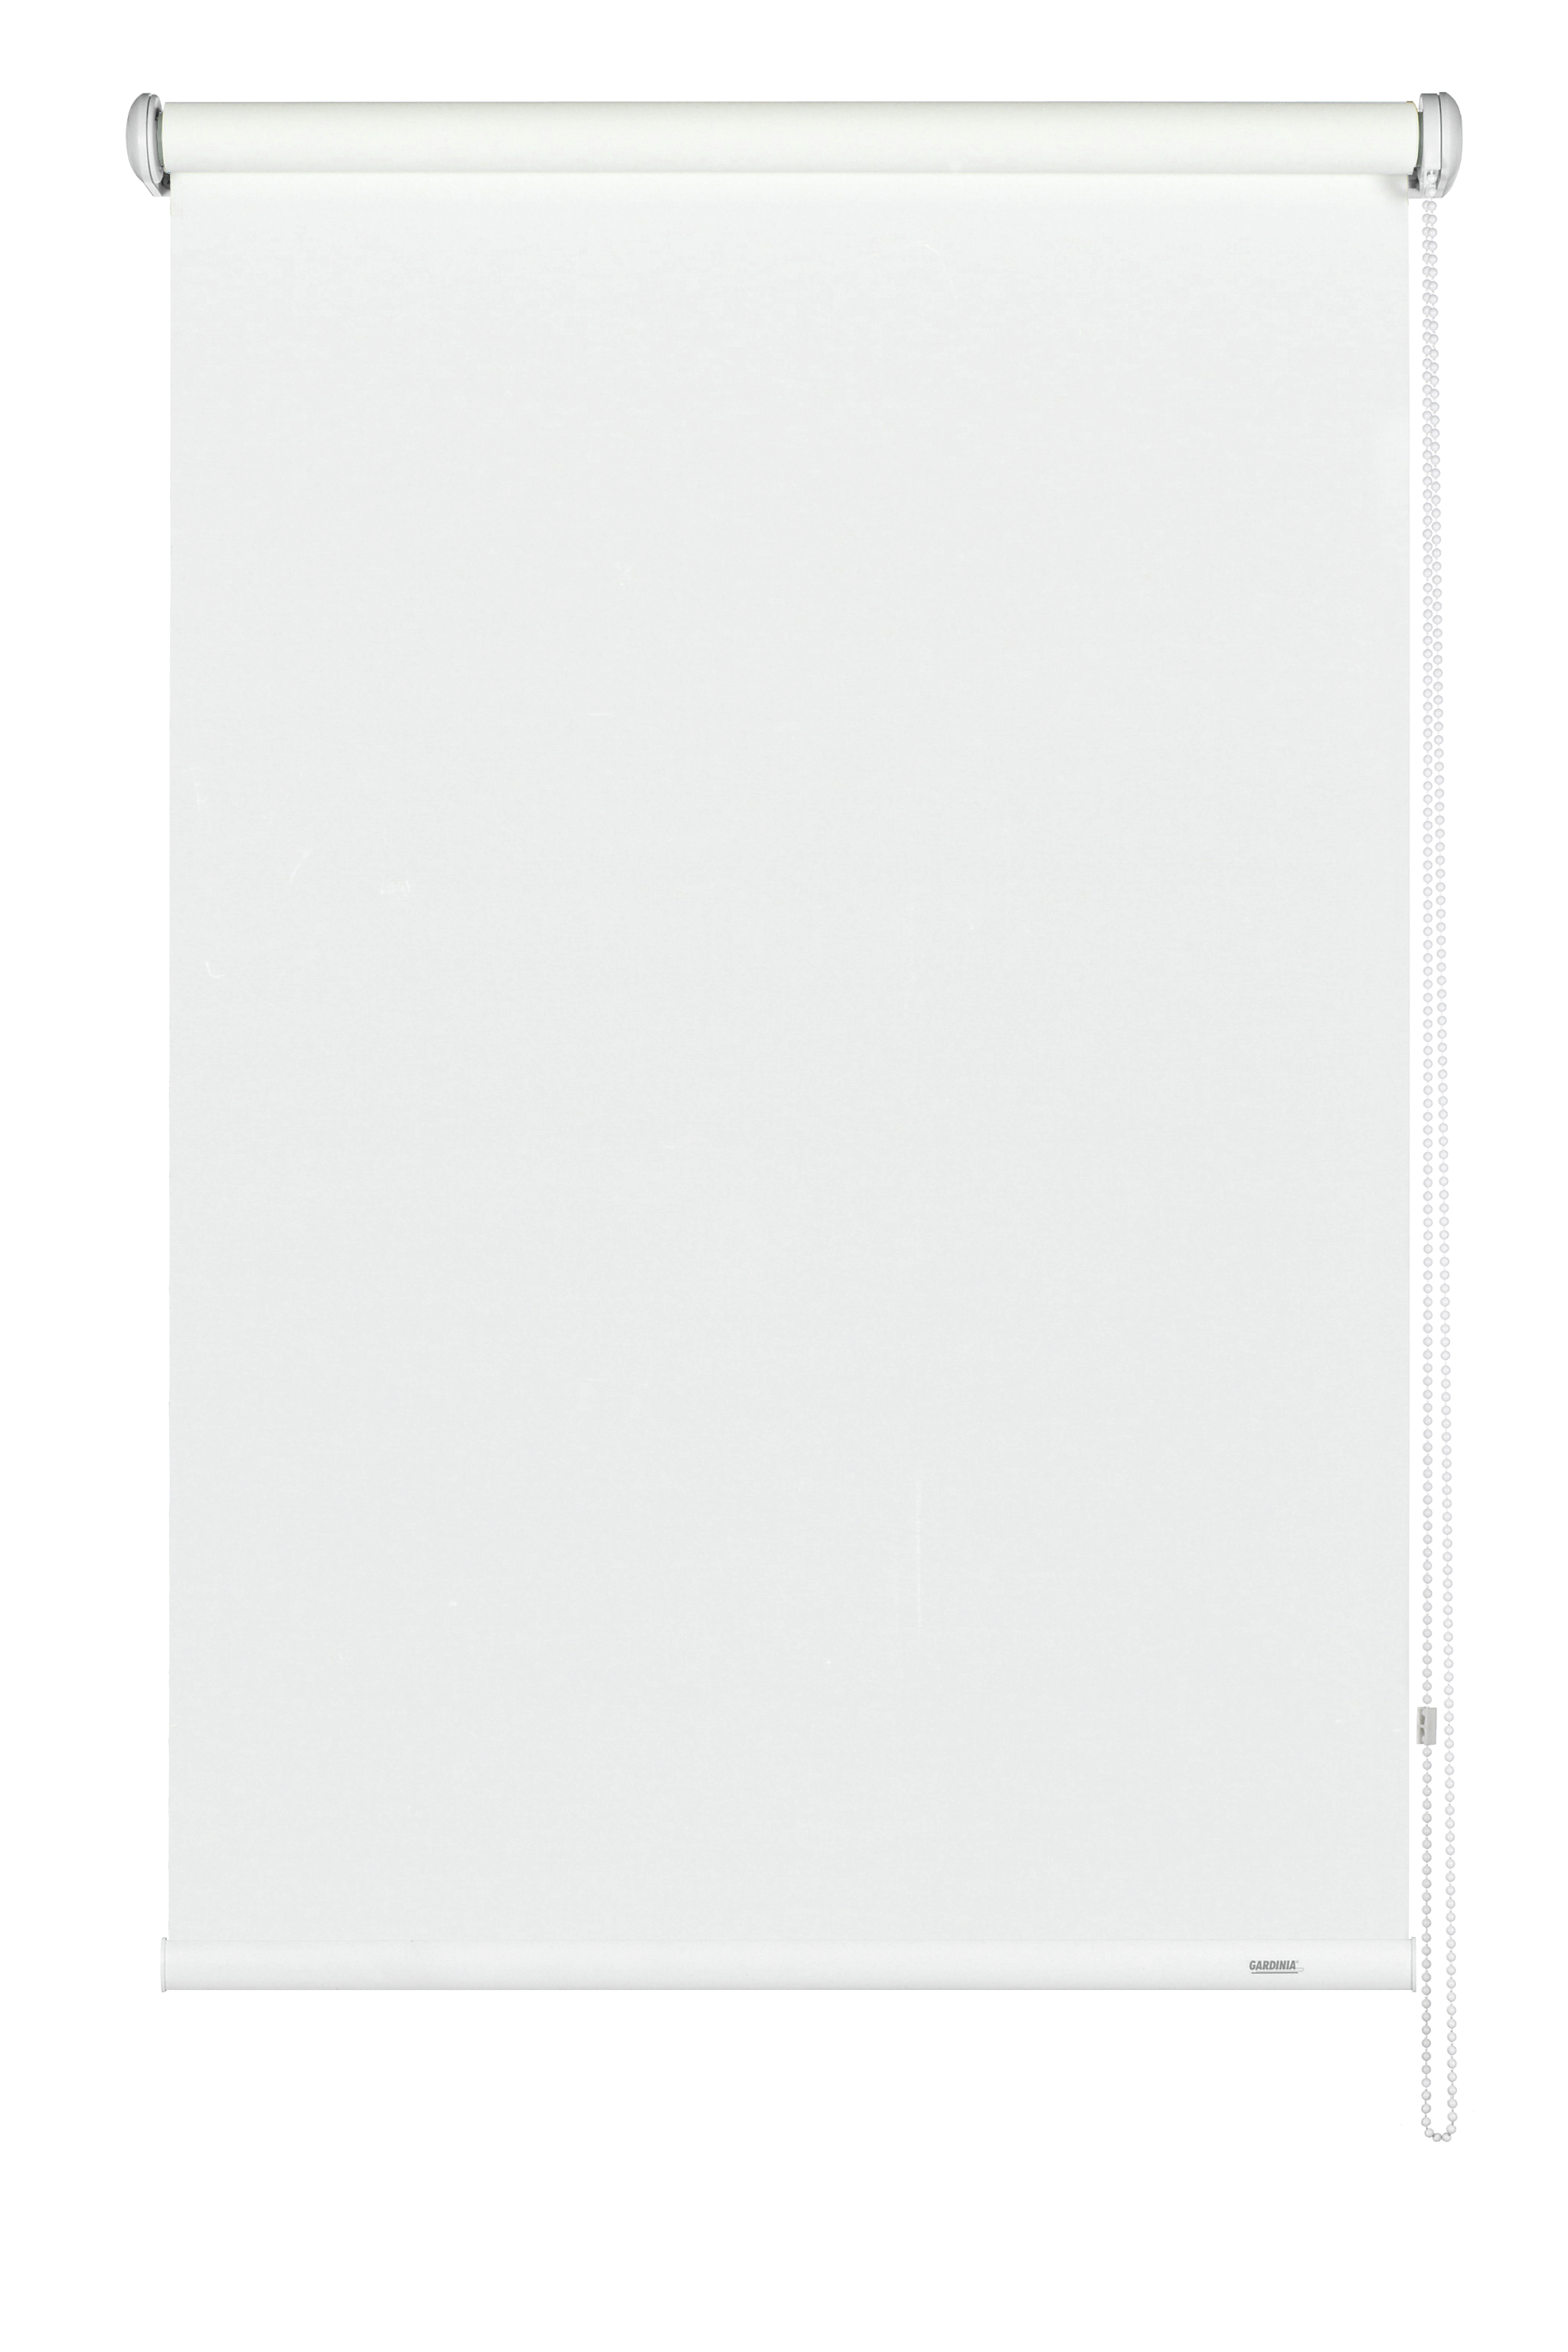 GARDINIA - Seitenzugrollo weiß 122x180cm 